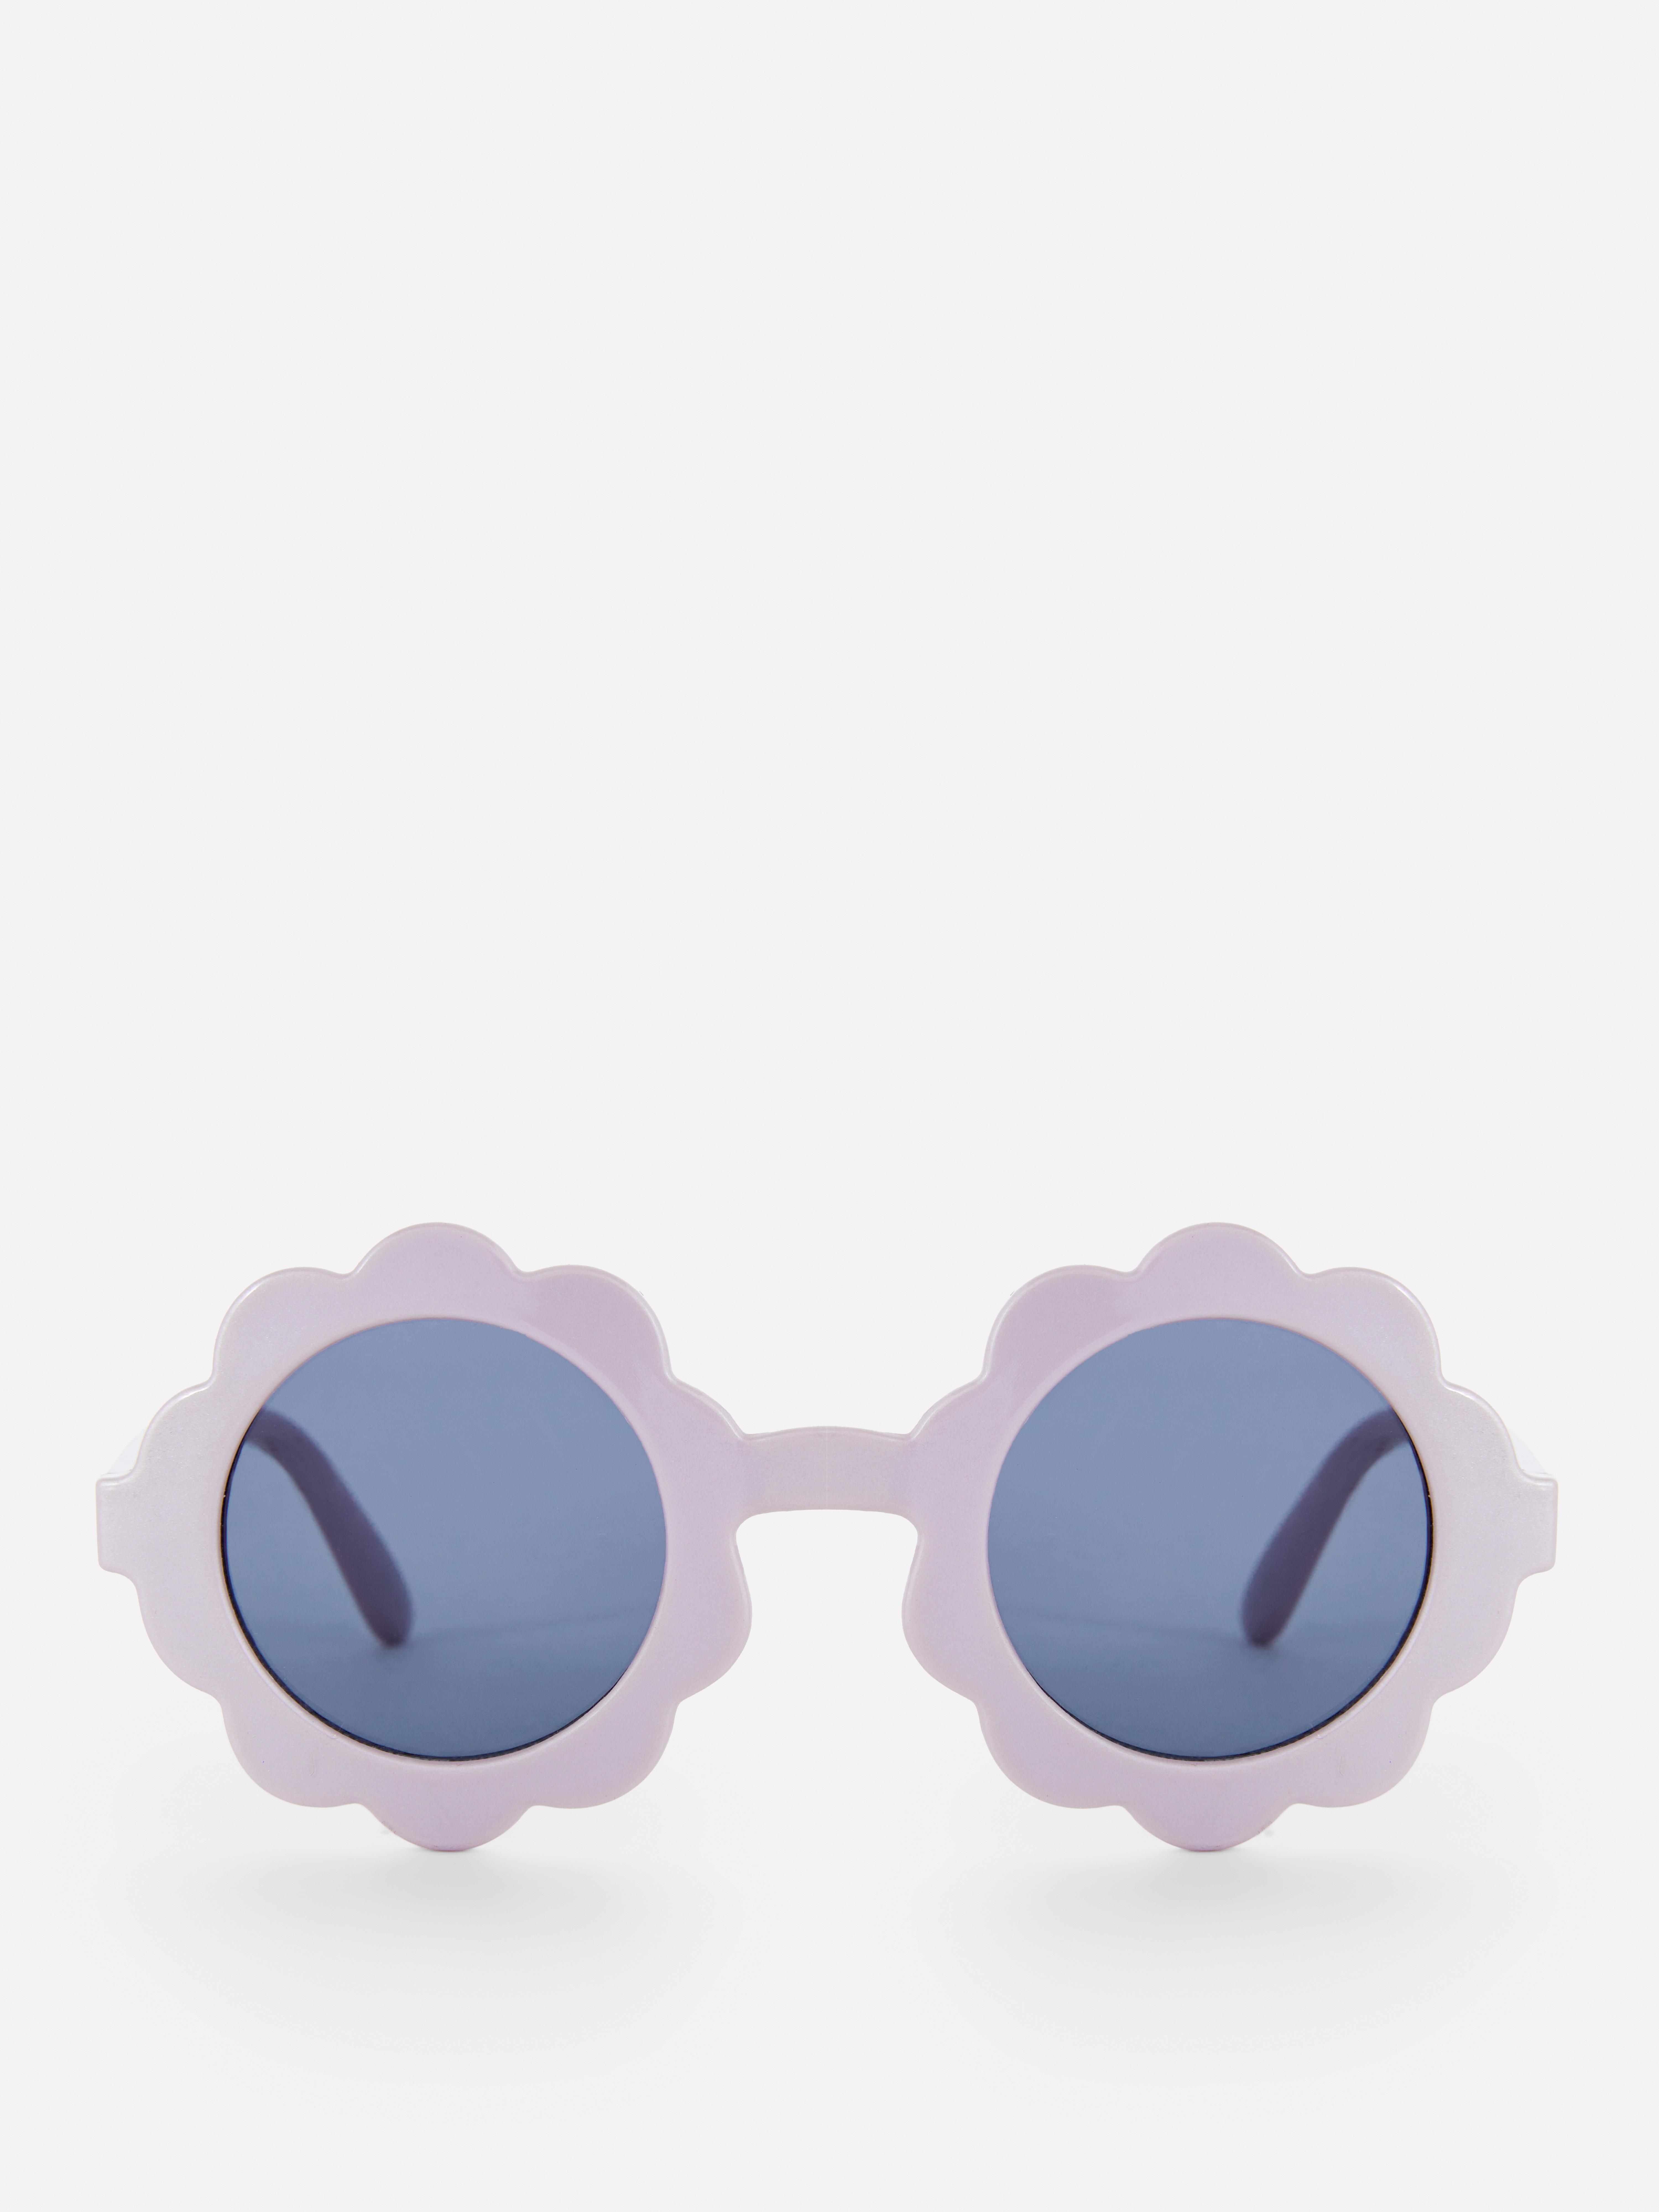 Flower Shaped Sunglasses